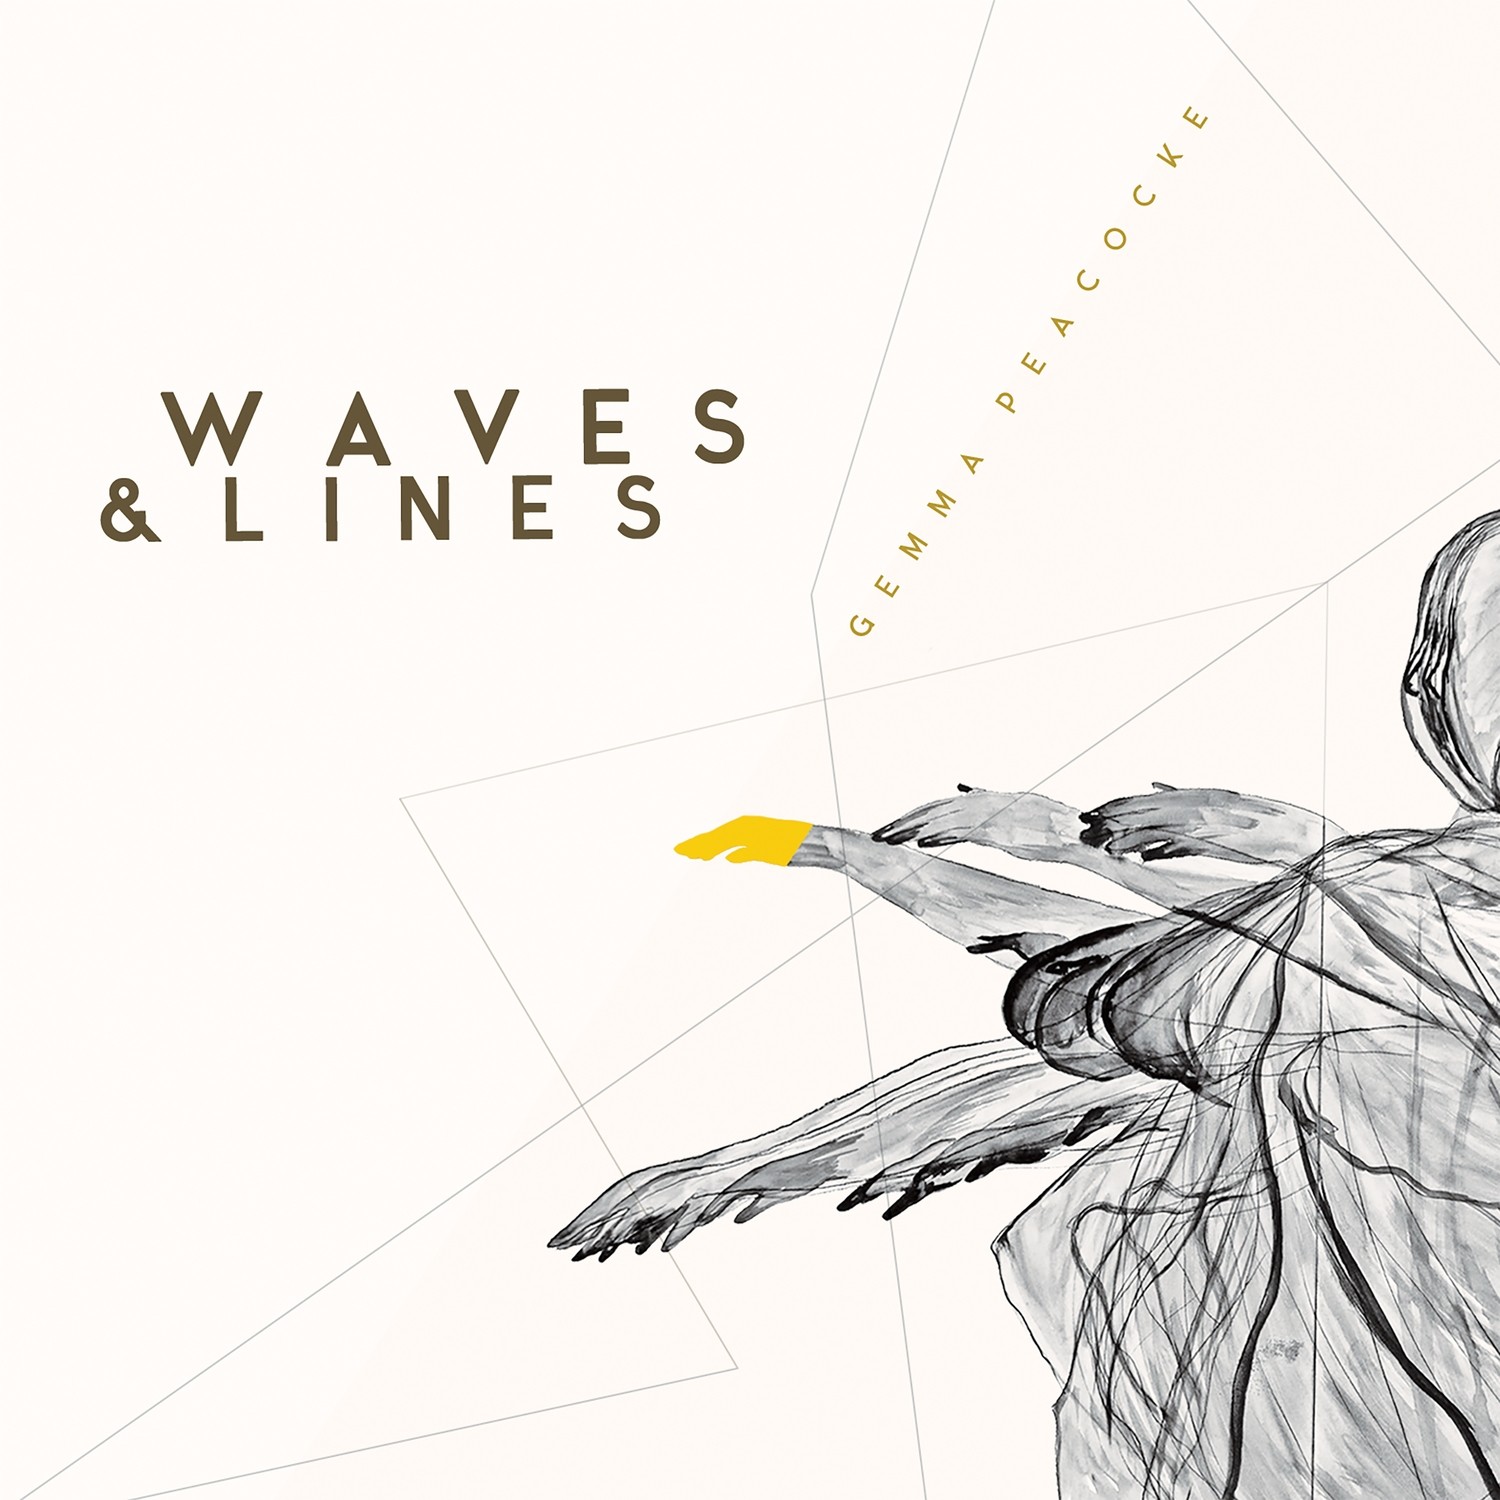 Waves & Lines CD + digital download